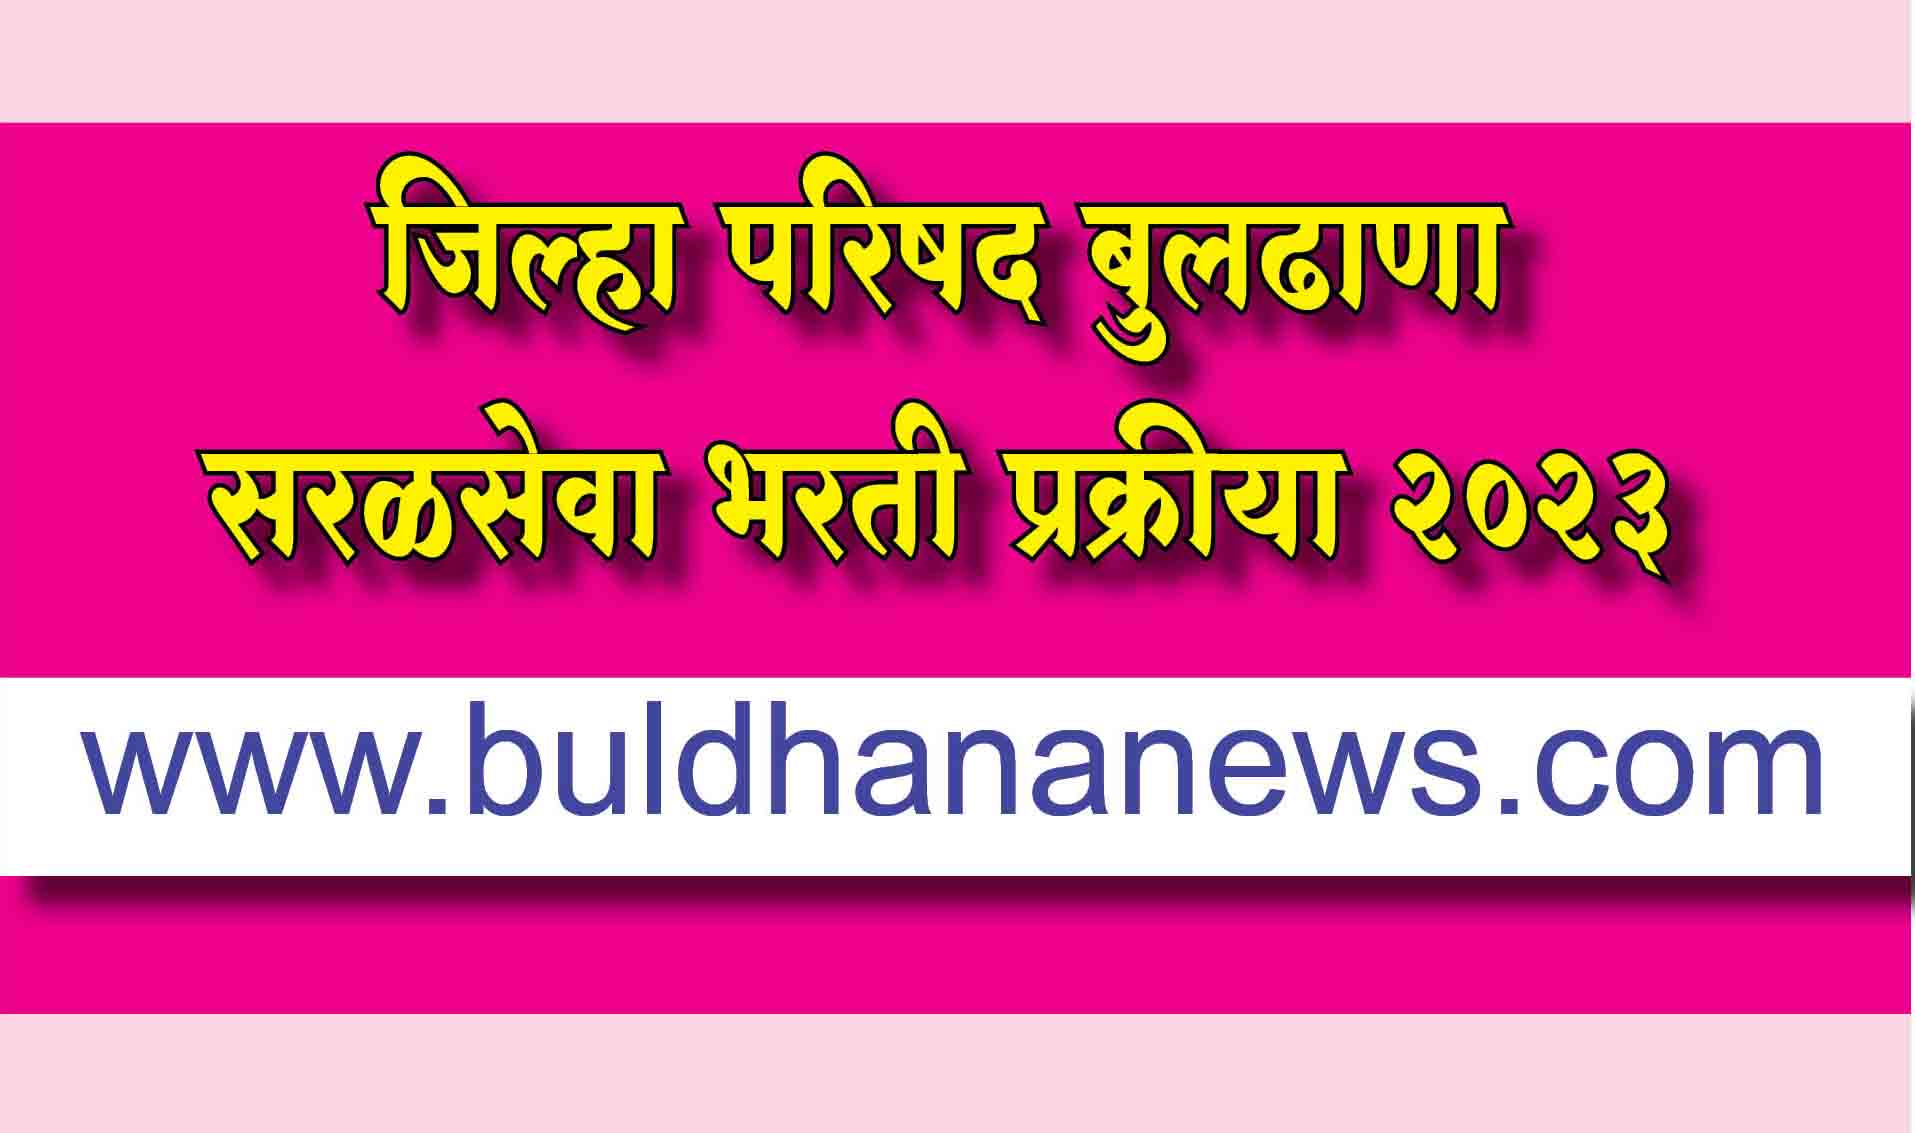 www.buldhananews.com